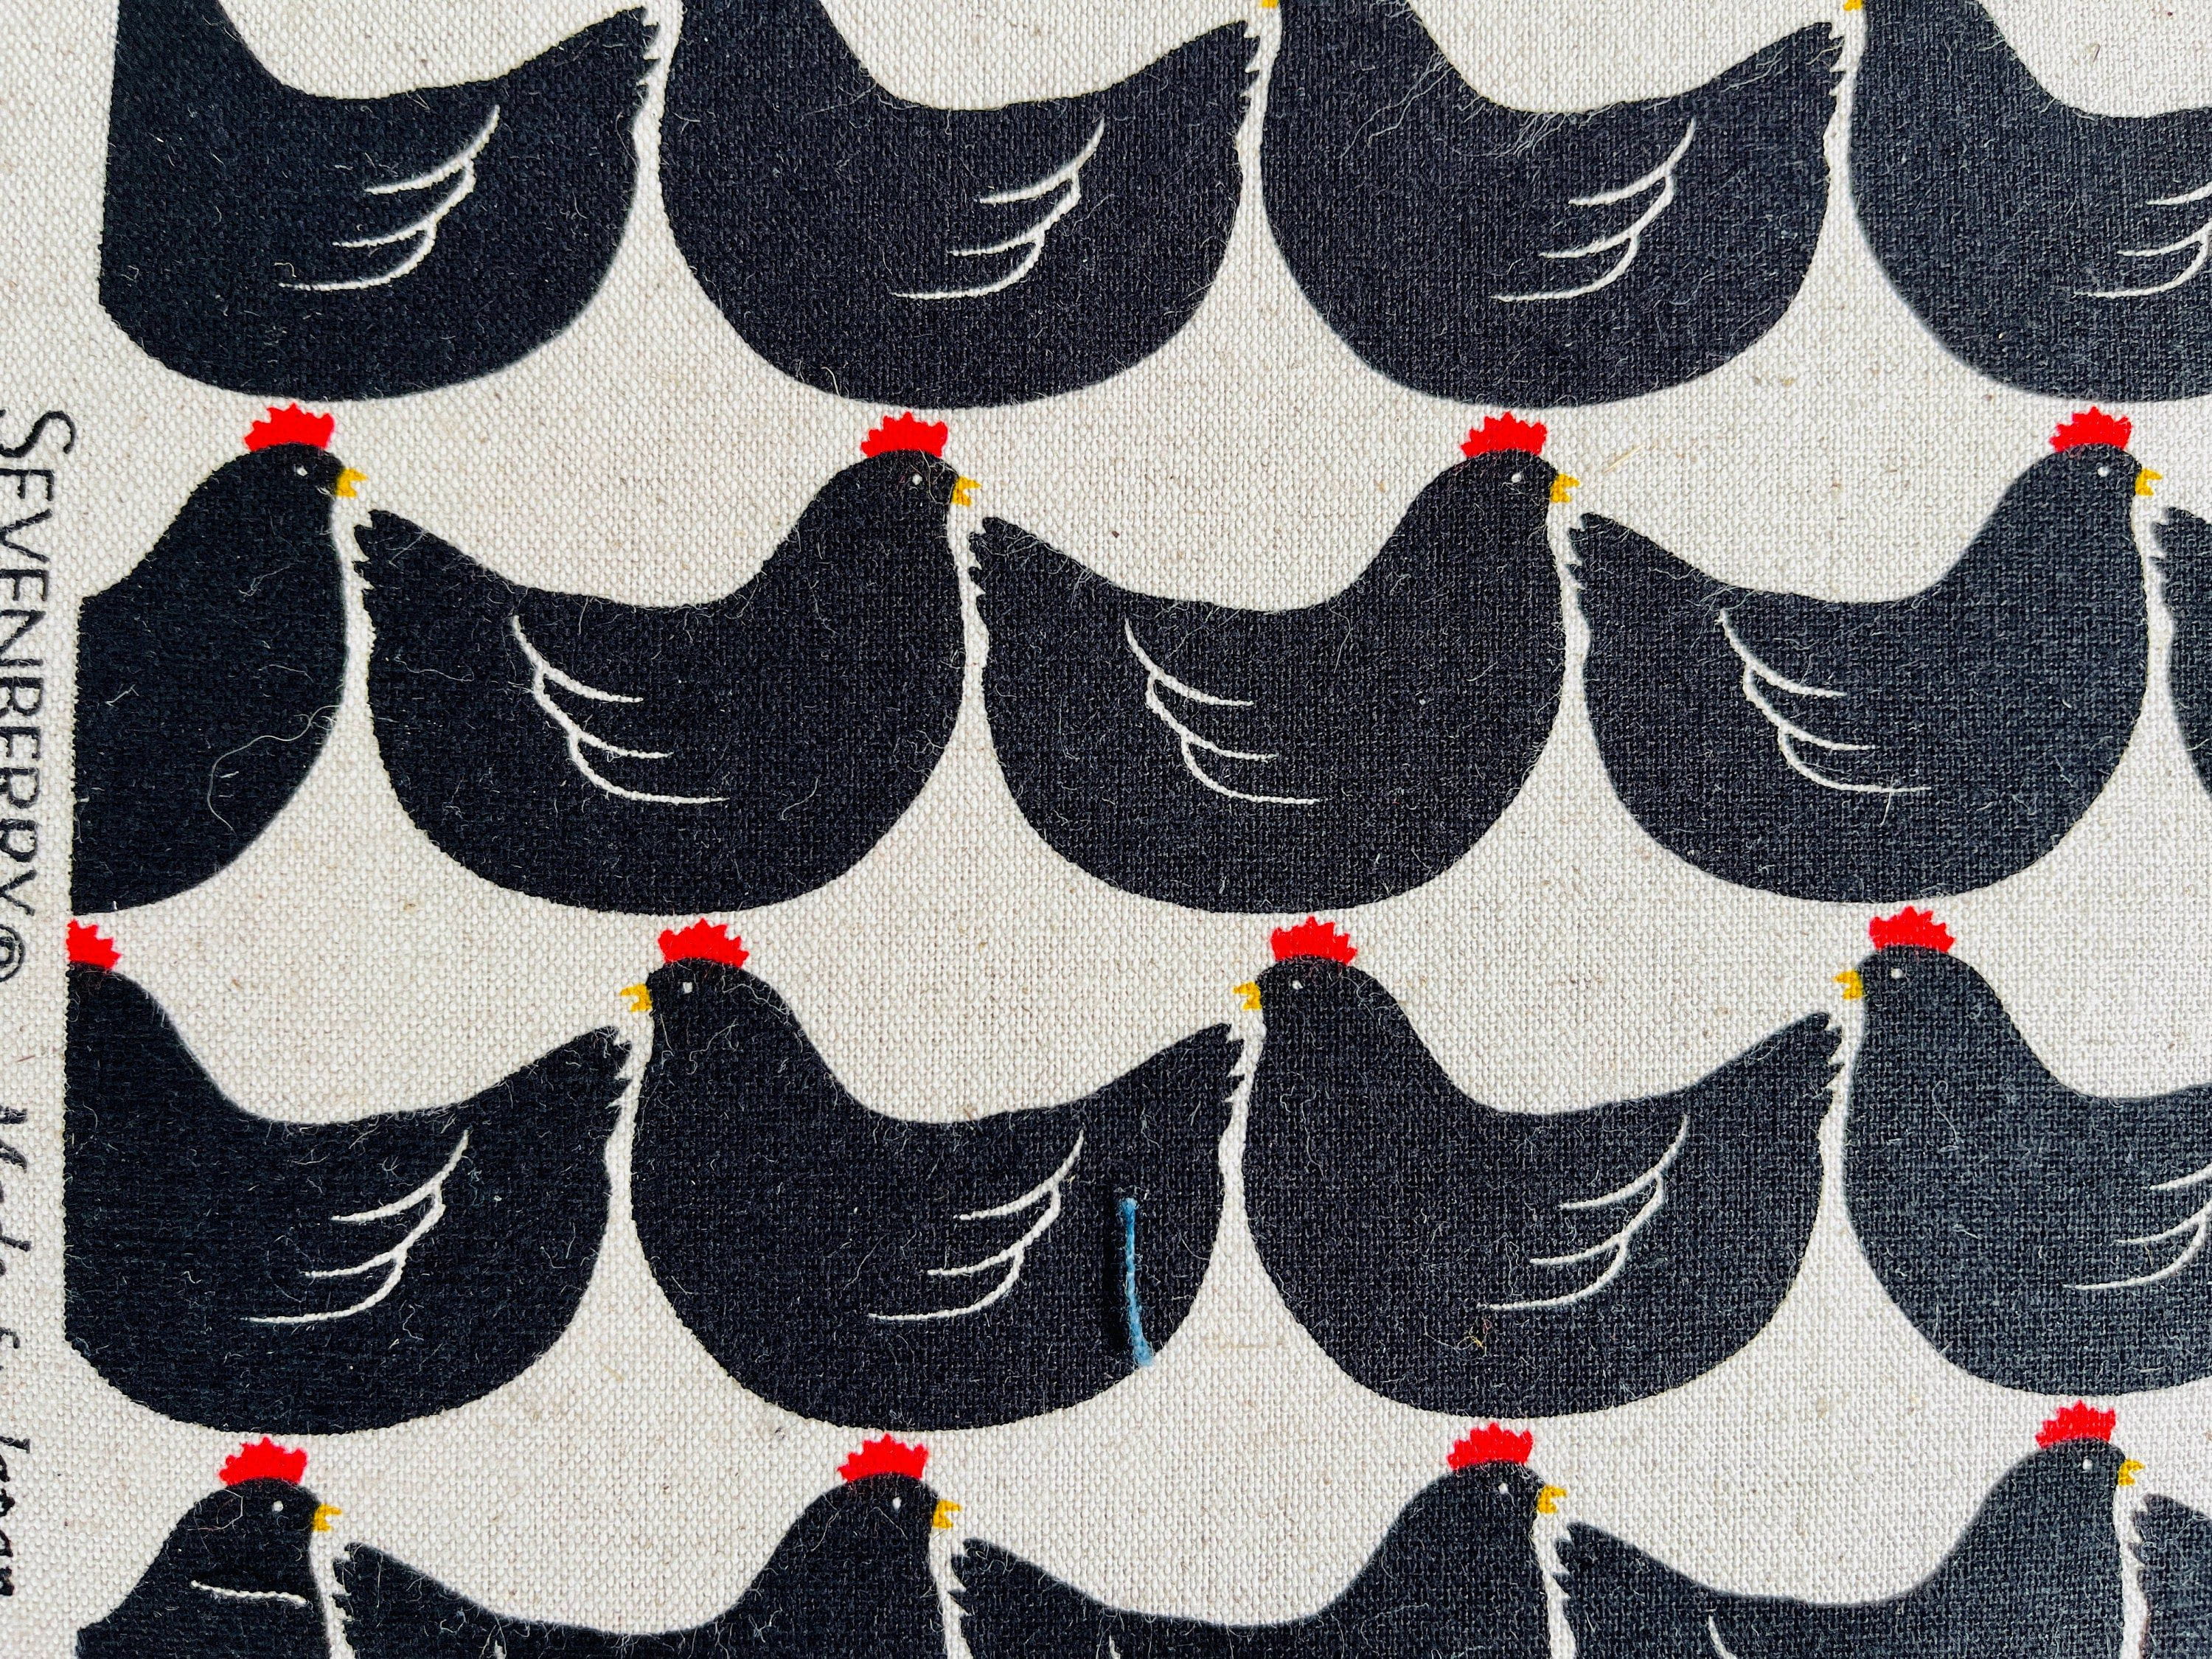 Chicken - Chicken Fabric - Robert Kaufman - Japanese Fabric - Lightweight Canvas Fabric